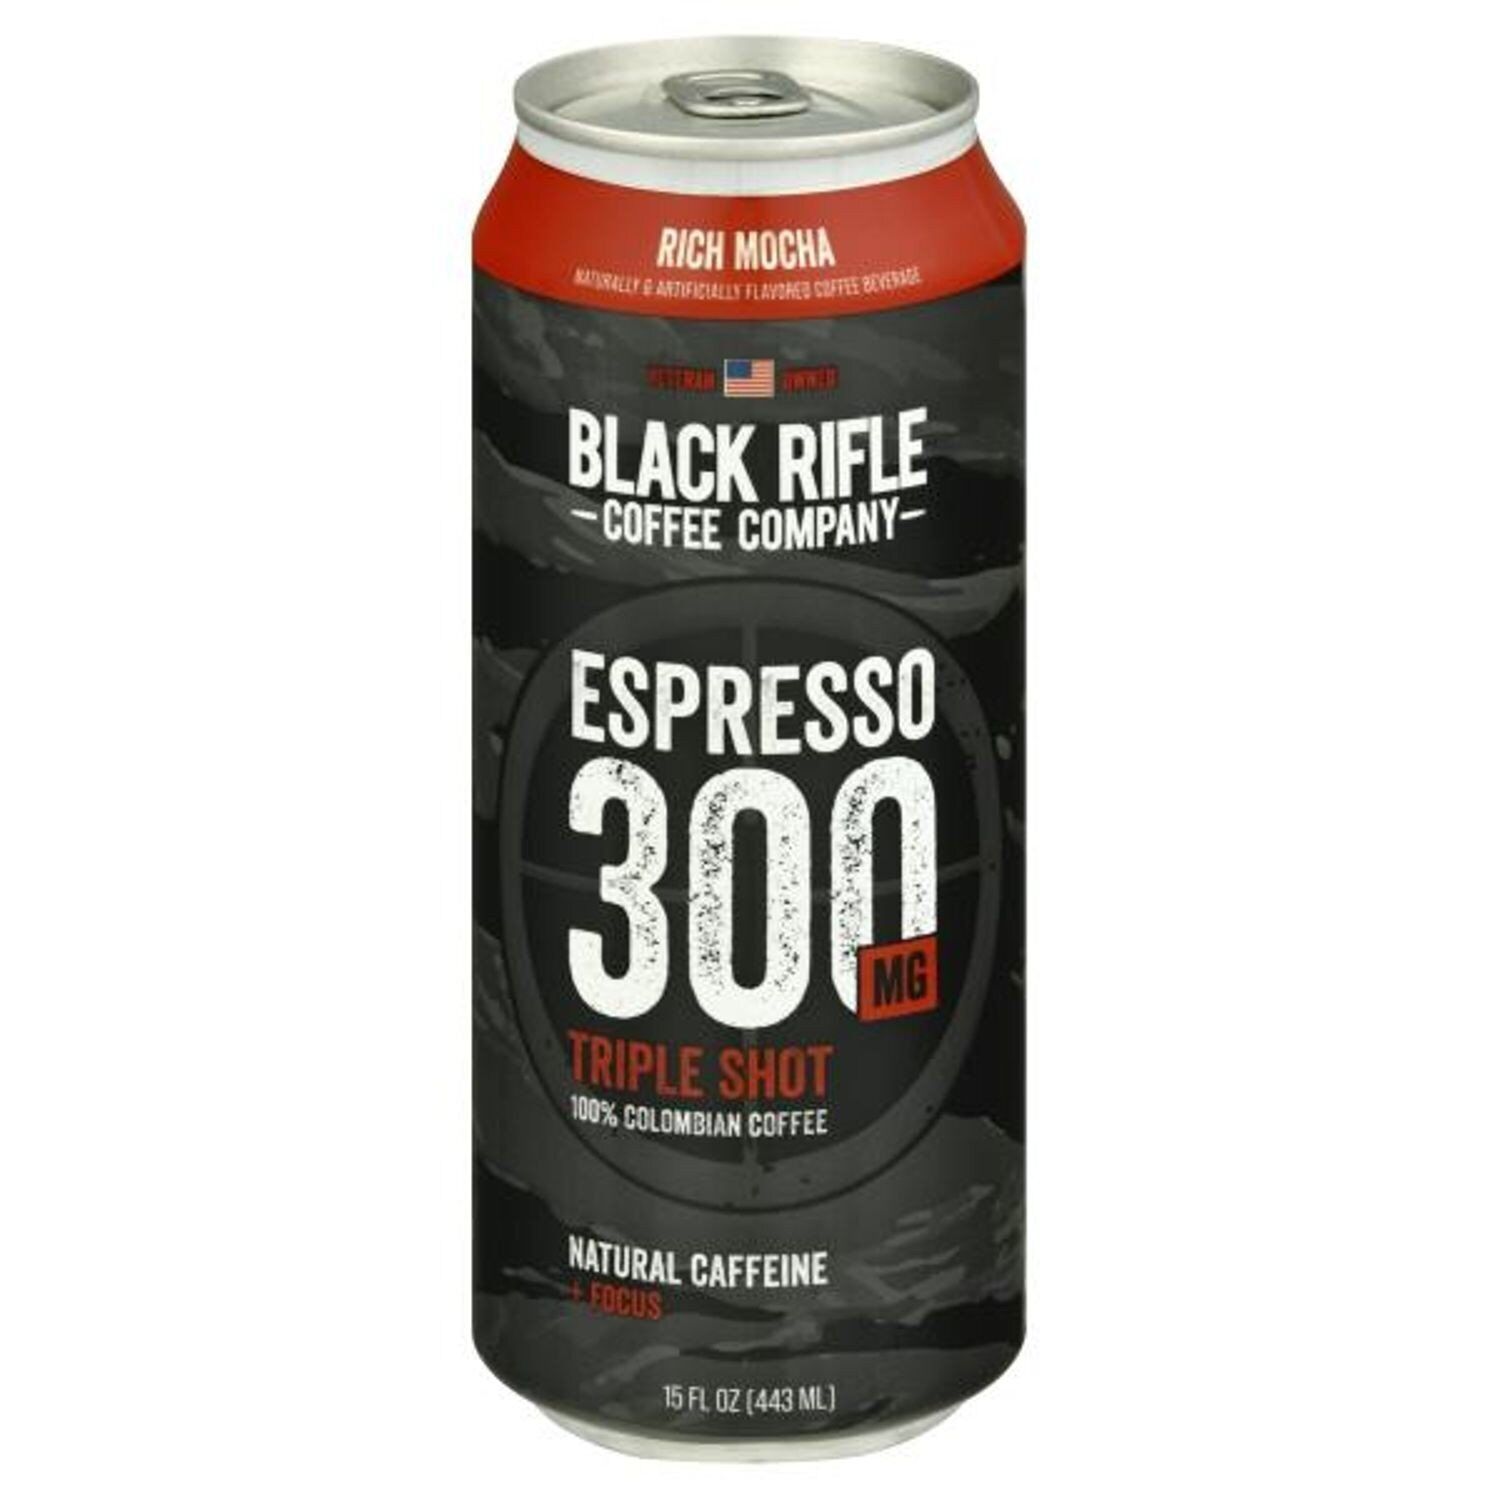 Black Rifle Coffee Co. Rich Mocha Espresso 300 Triple Shot, 12-pack 15 Fl Oz...